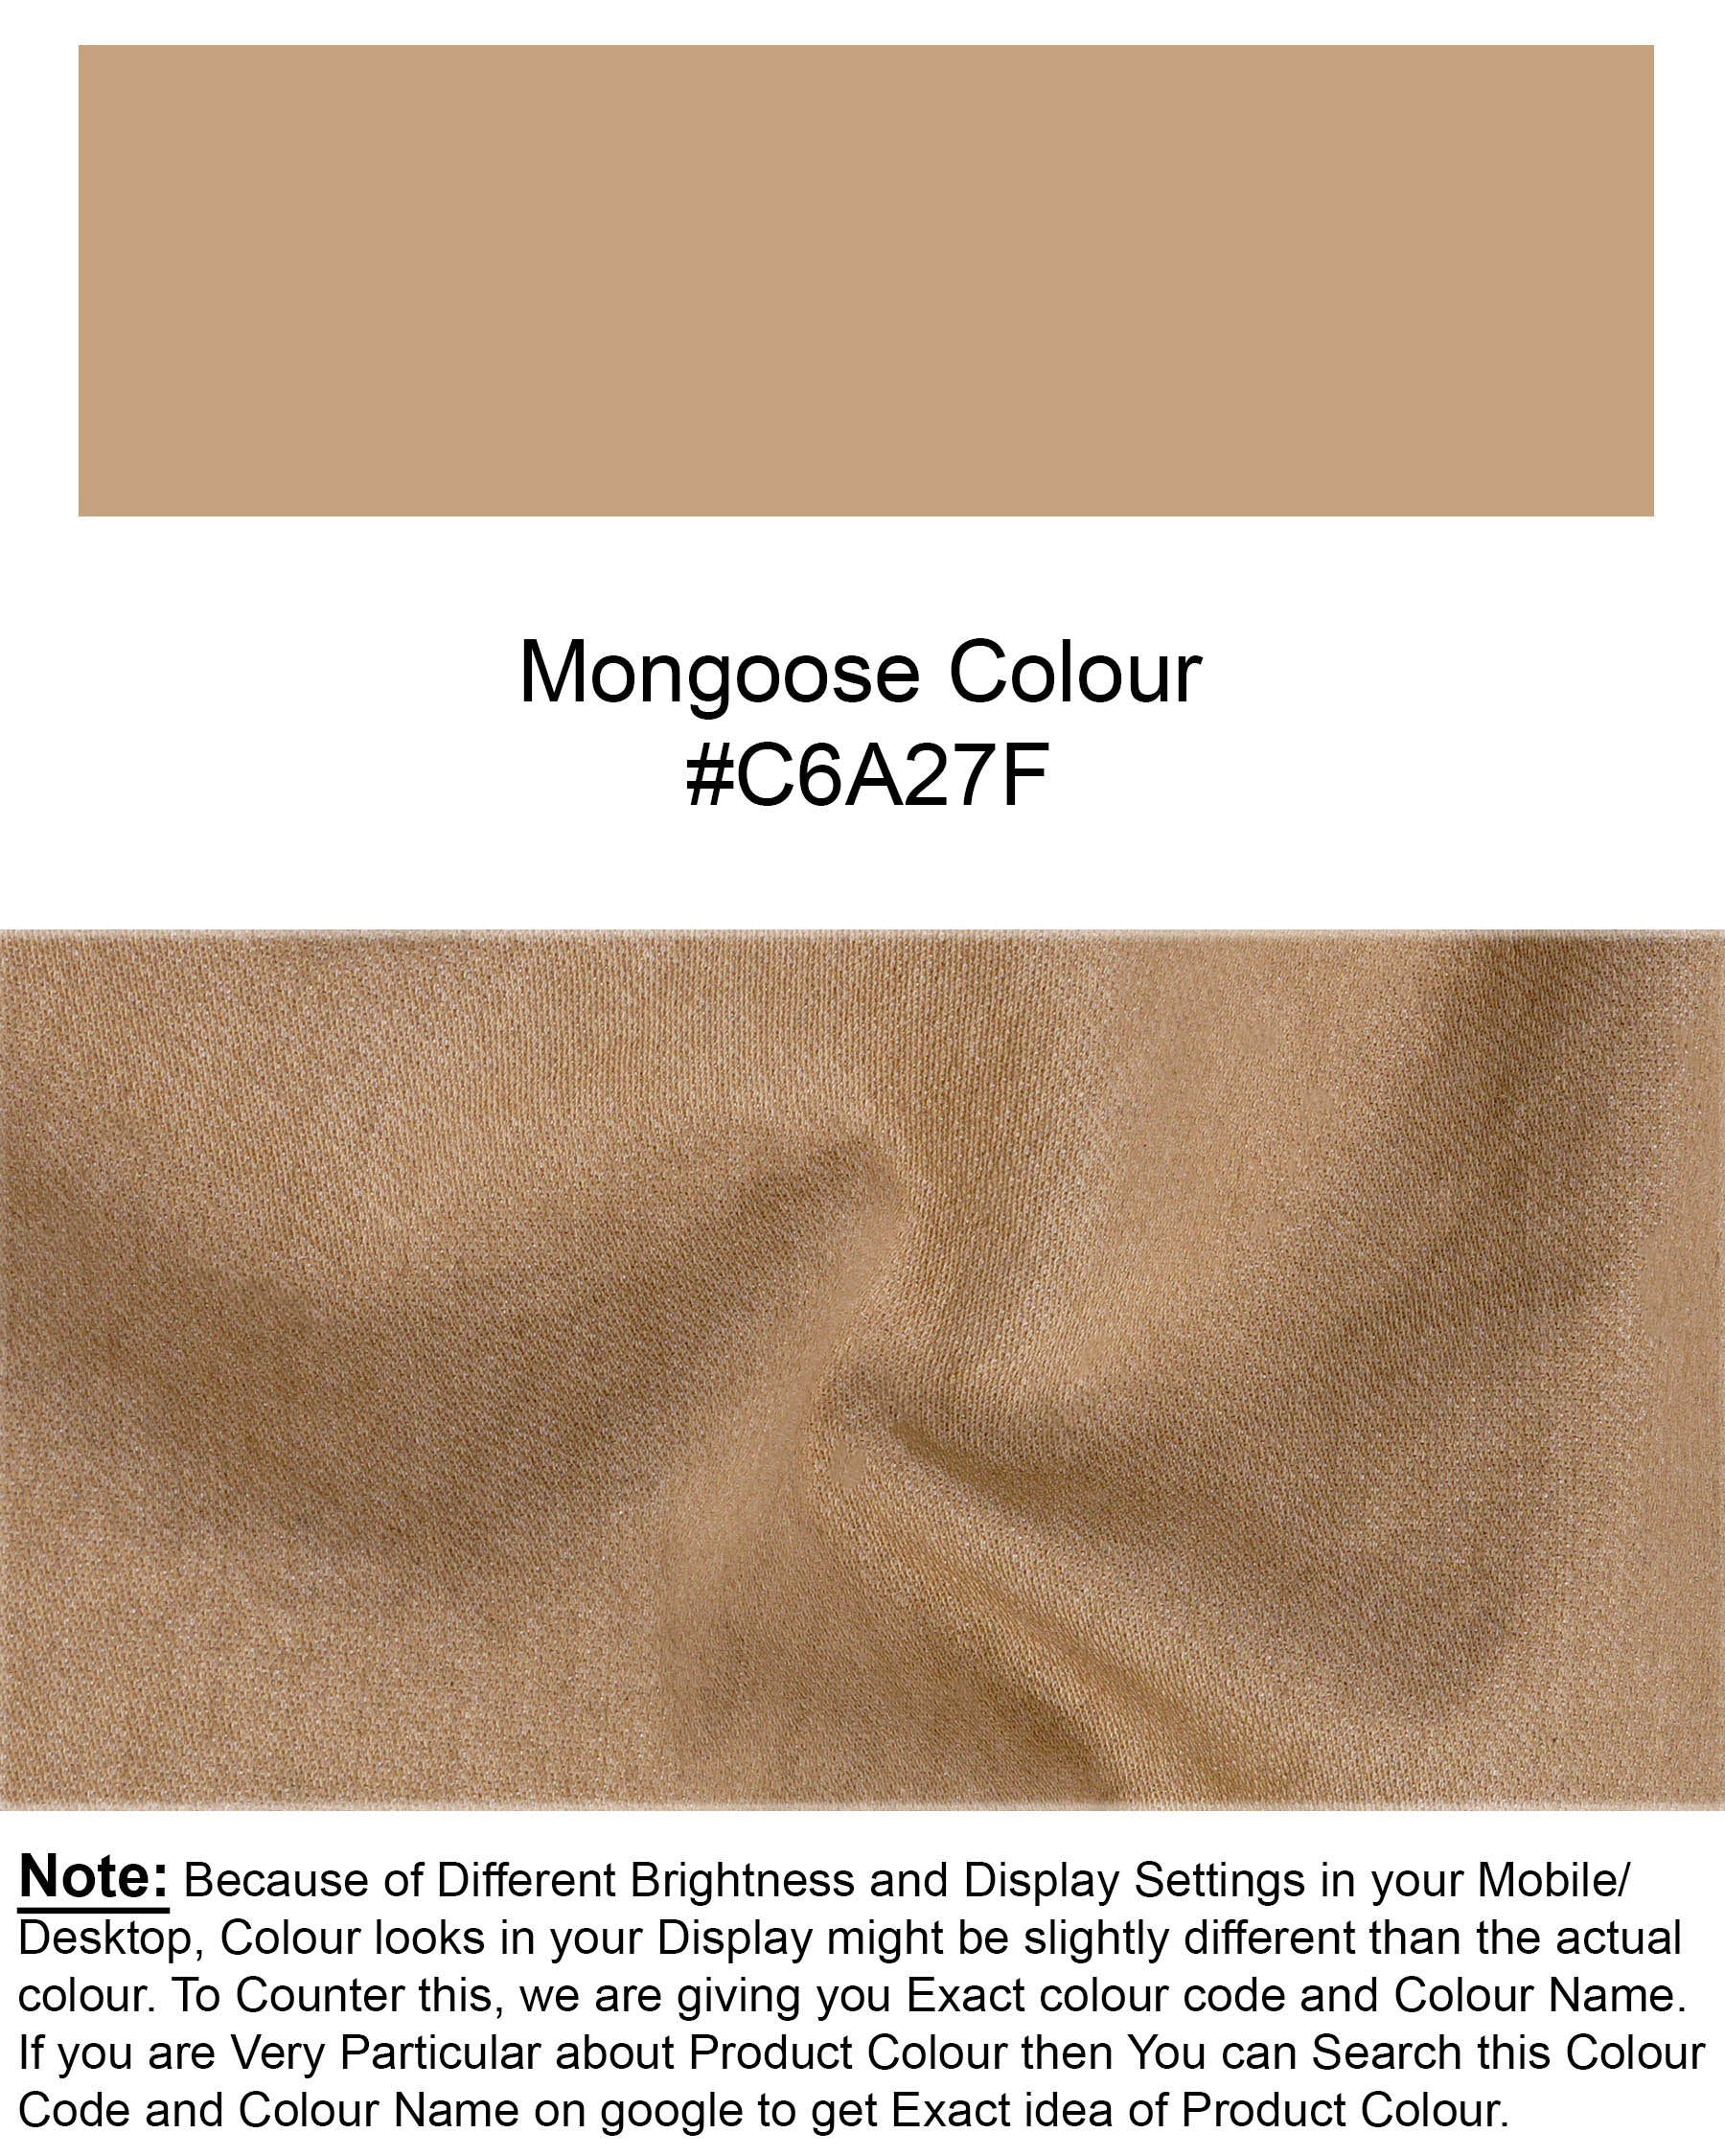 Mongoose Khaki Rinse Wash Clean Look Stretchable Denim J151-32, J151-34, J151-36, J151-38, J151-40